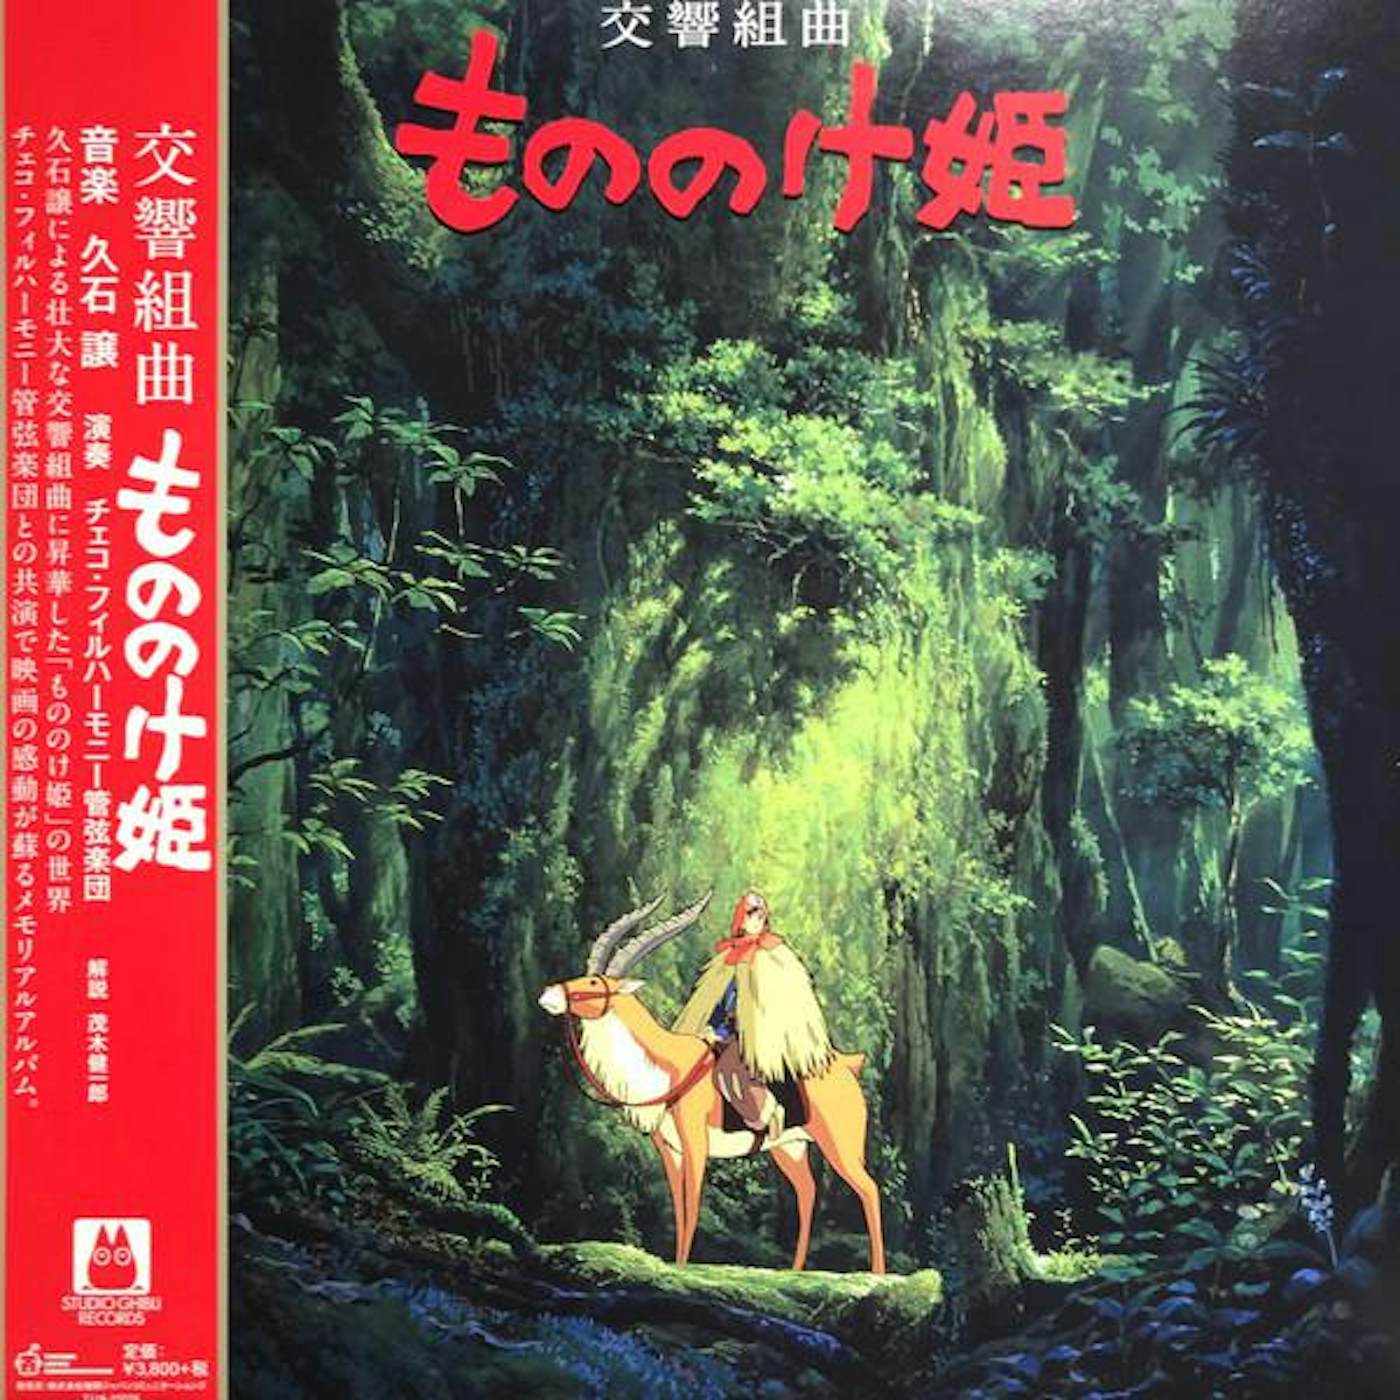 Princess Mononoke / O.S.T. PRINCESS MONONOKE (SYMPHONIC SUITE) / Original Soundtrack Vinyl Record